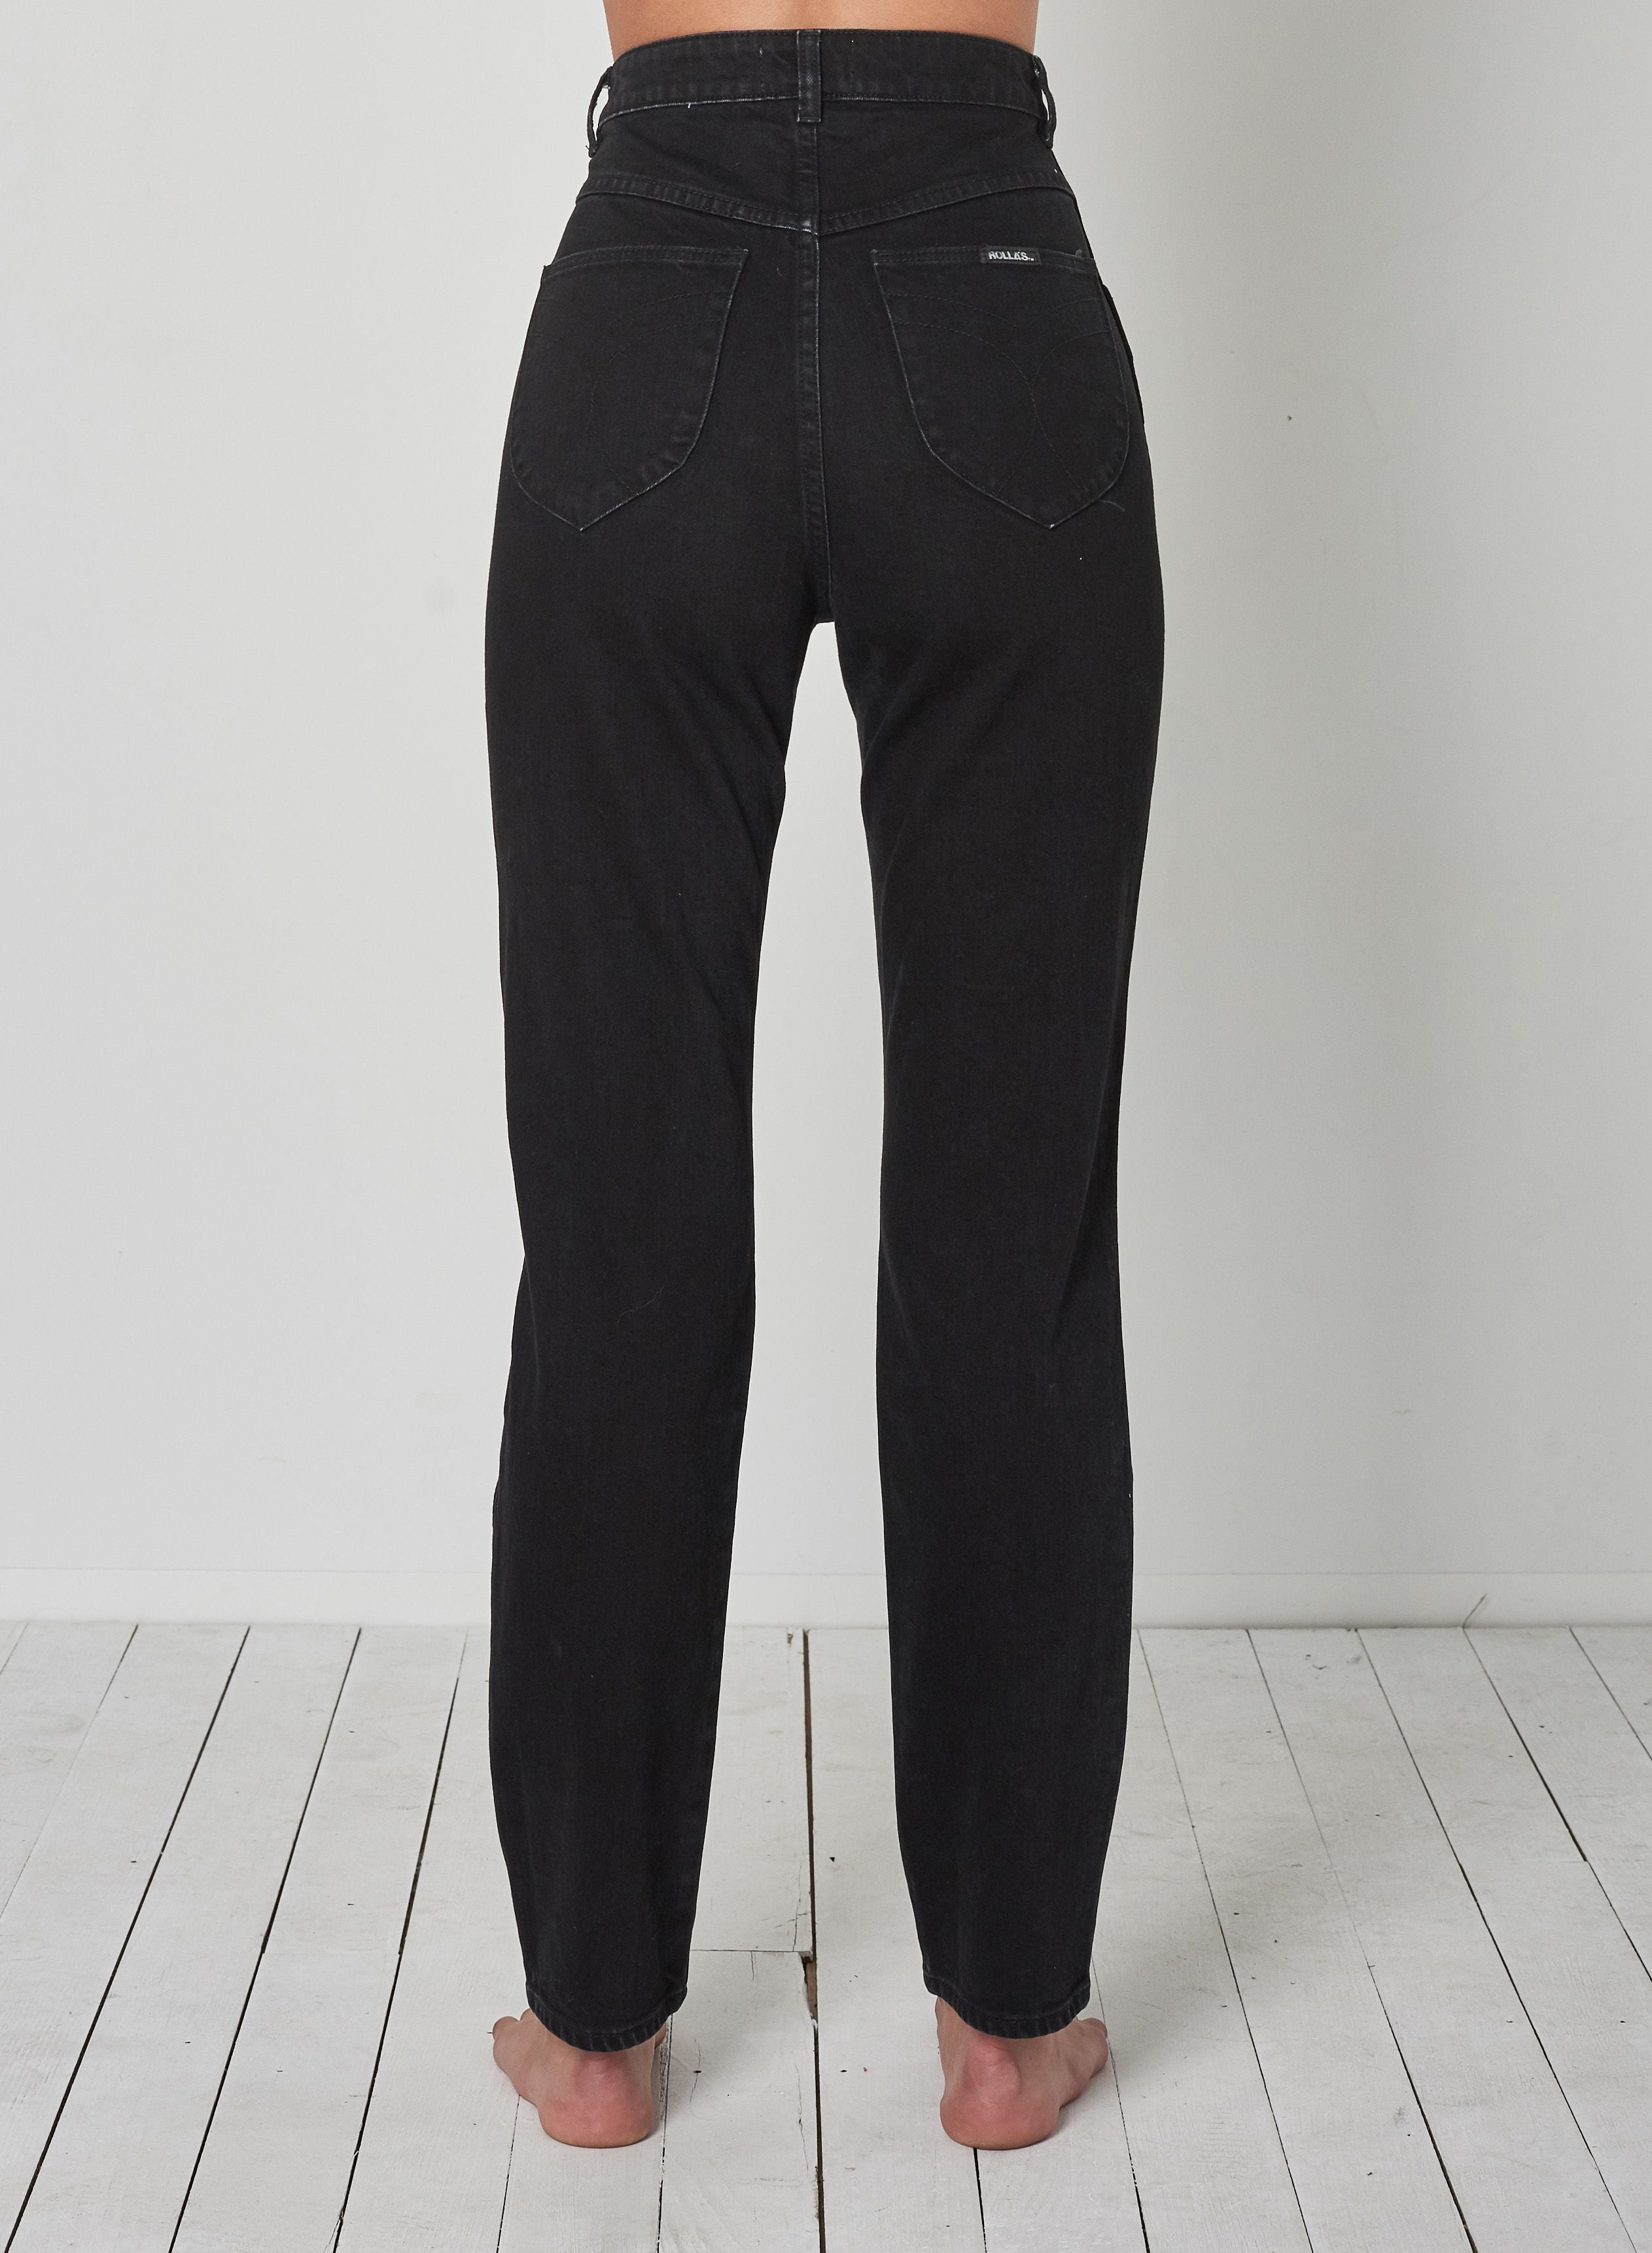 Elle Jeans in Comfort Jet Black by Rolla&#39;s